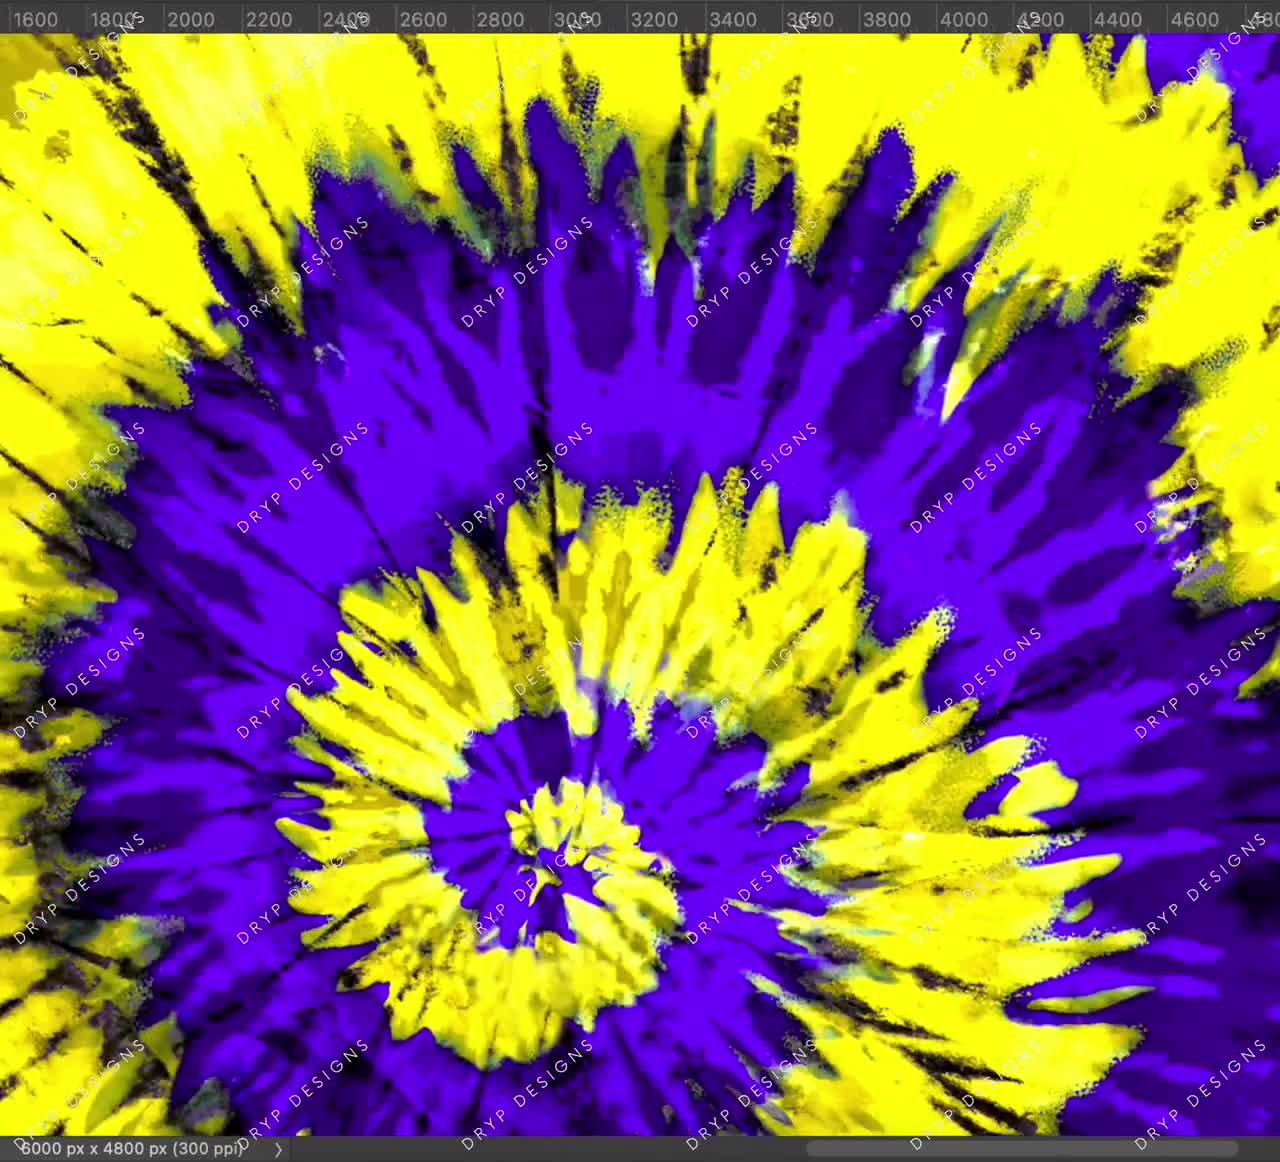 Buy Innovative Designs tie dye sketchbook set yellow purple combo